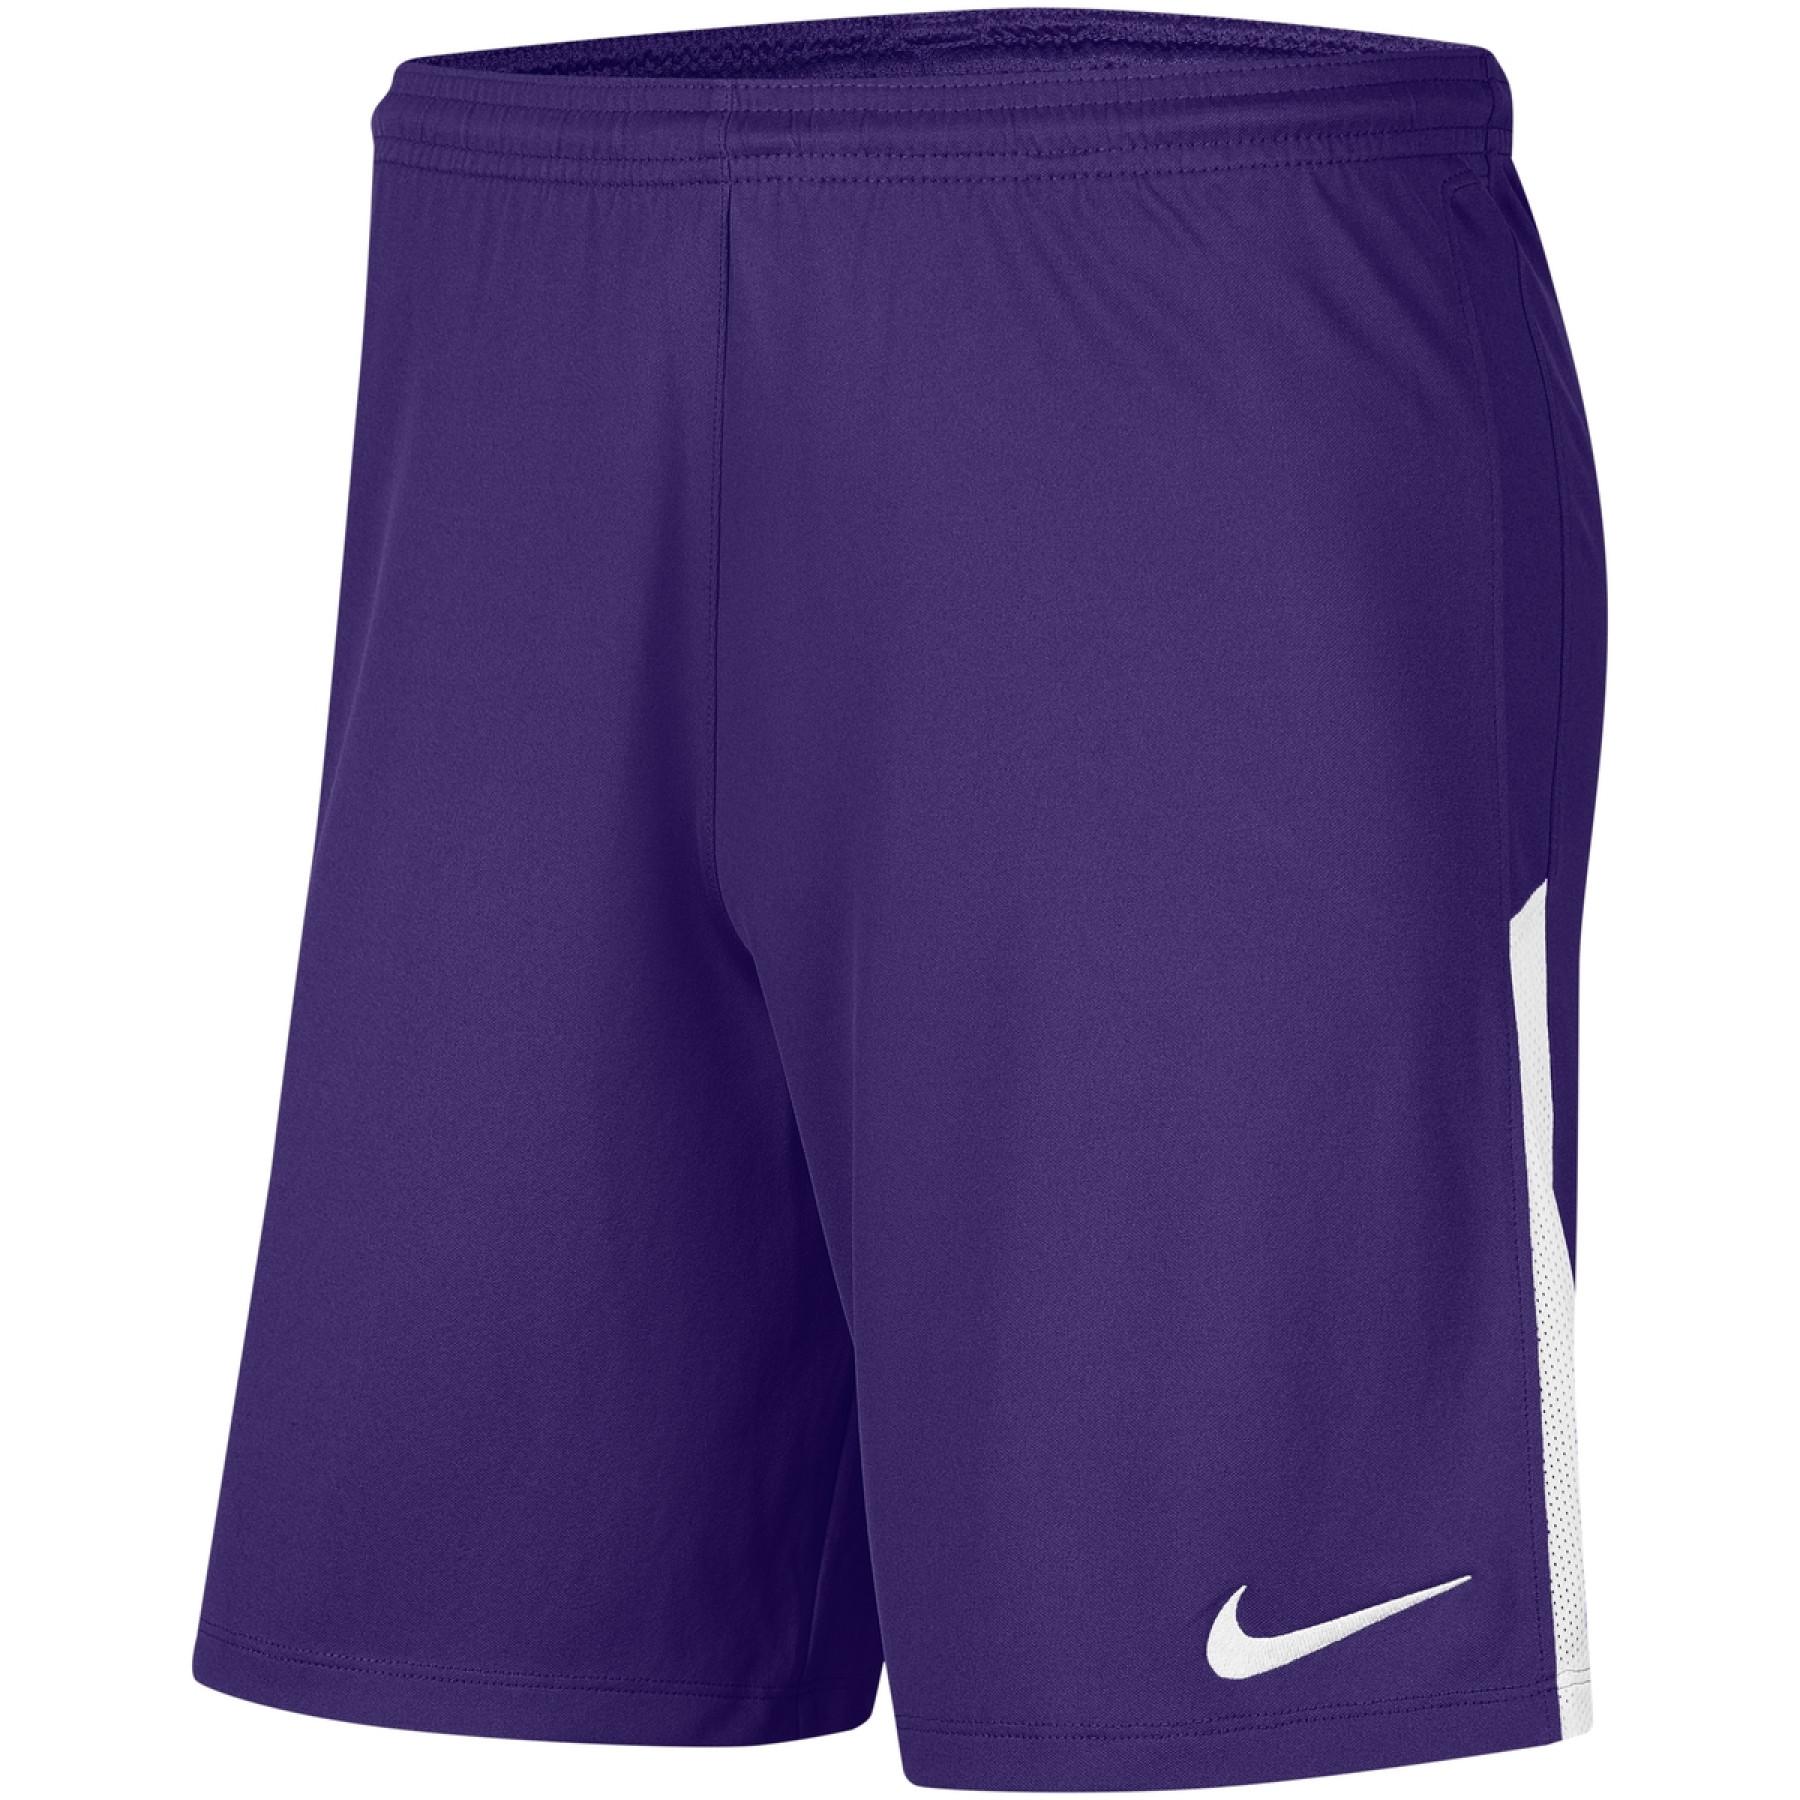 Children's shorts Nike Dri-FIT League Knit II - Teamwear - Football